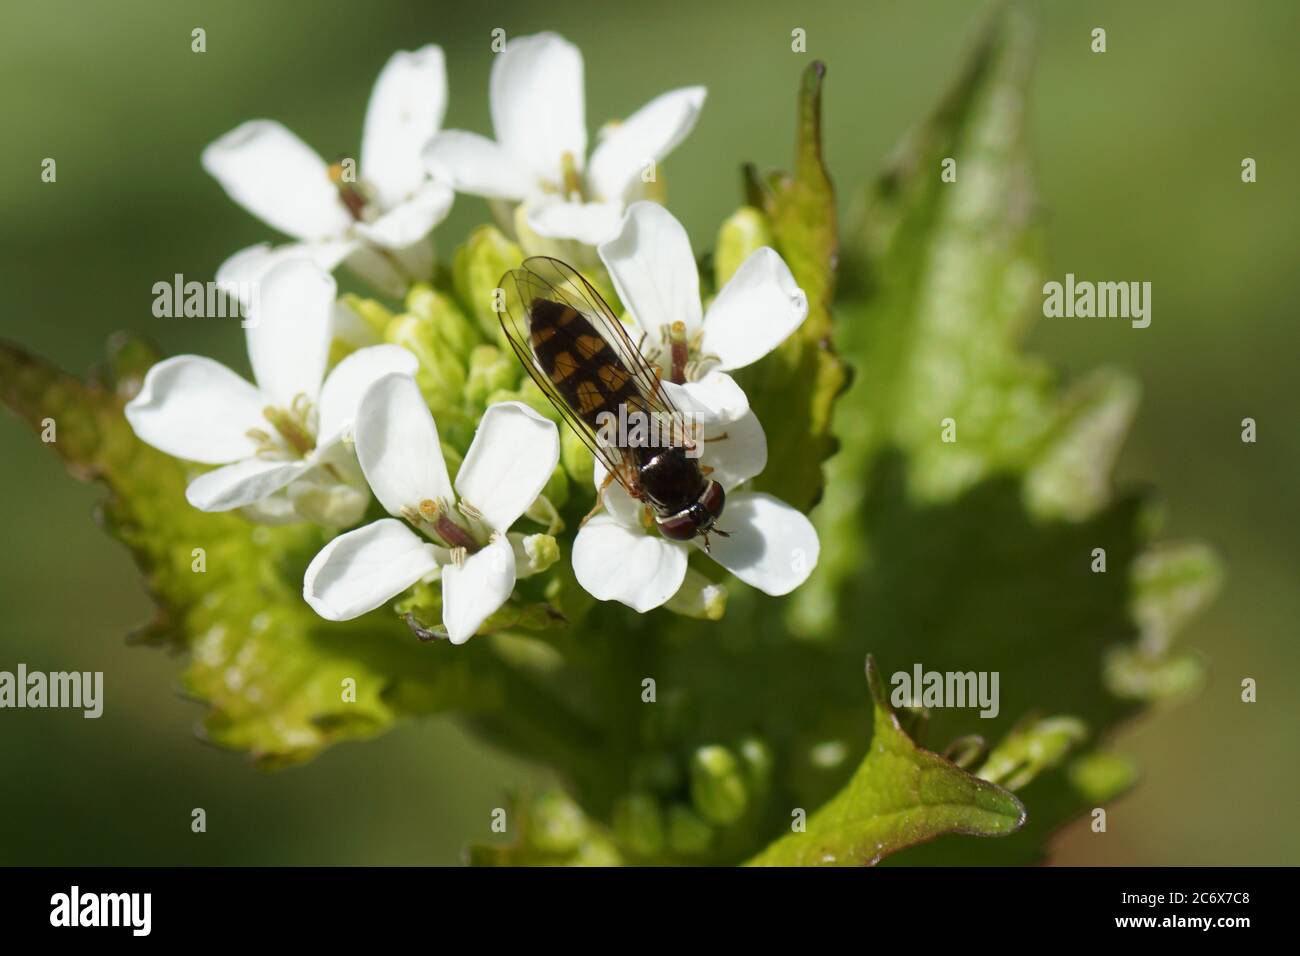 Melanostoma scalare hembra de la familia Syrphidae sobre flores de mostaza de ajo (Alliaria petiolata). Familia Brassicaceae o Cruciferae. Primavera Foto de stock